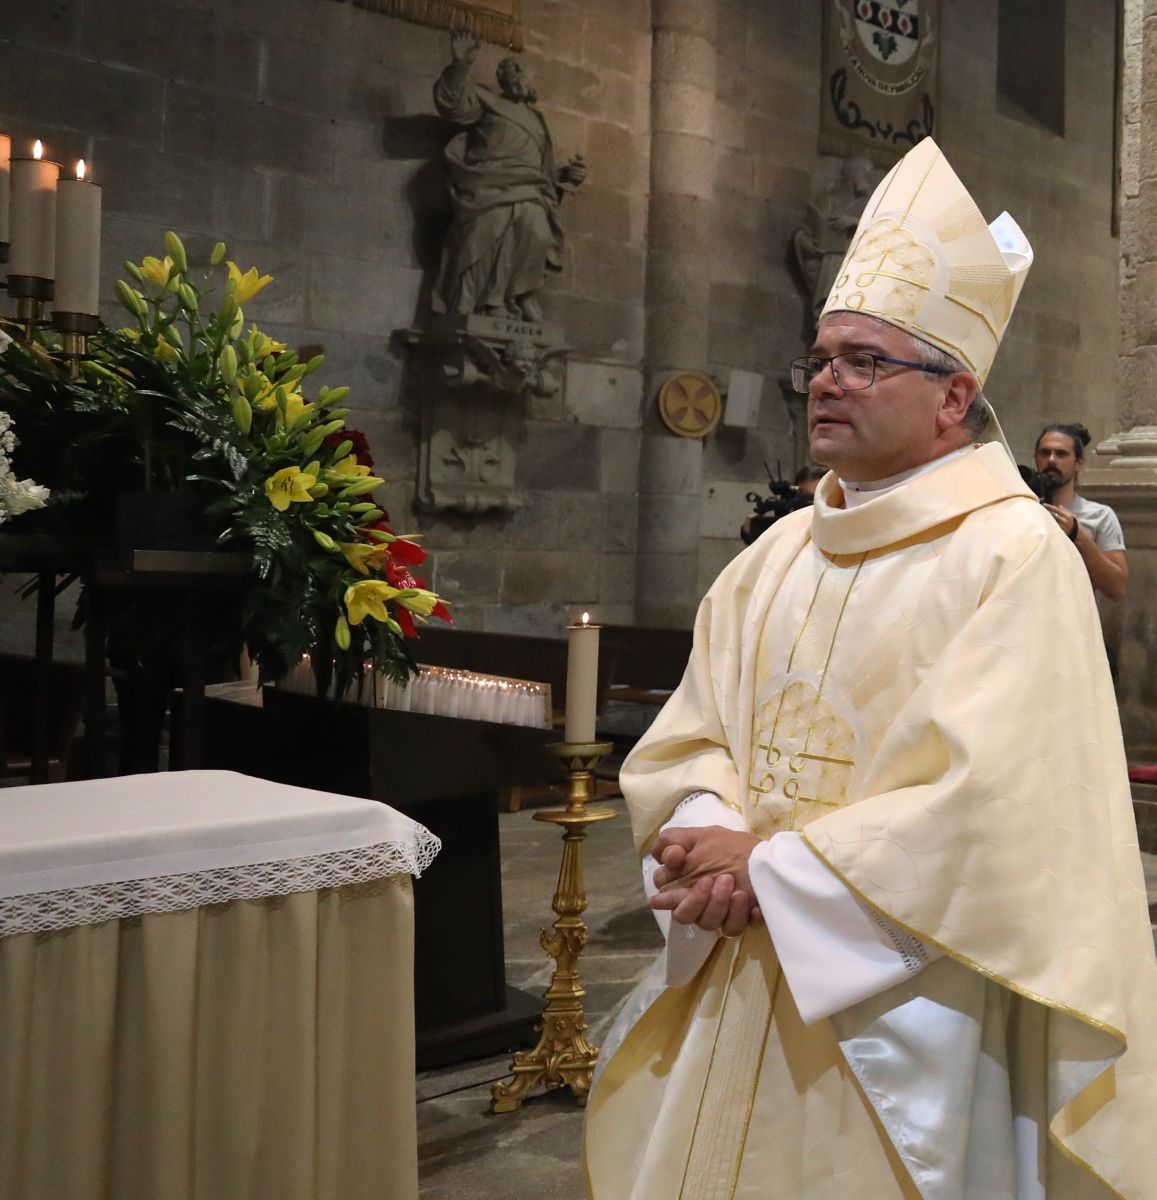 Arcebispo de Braga convida a tocar a realidade com gestos de humanidade